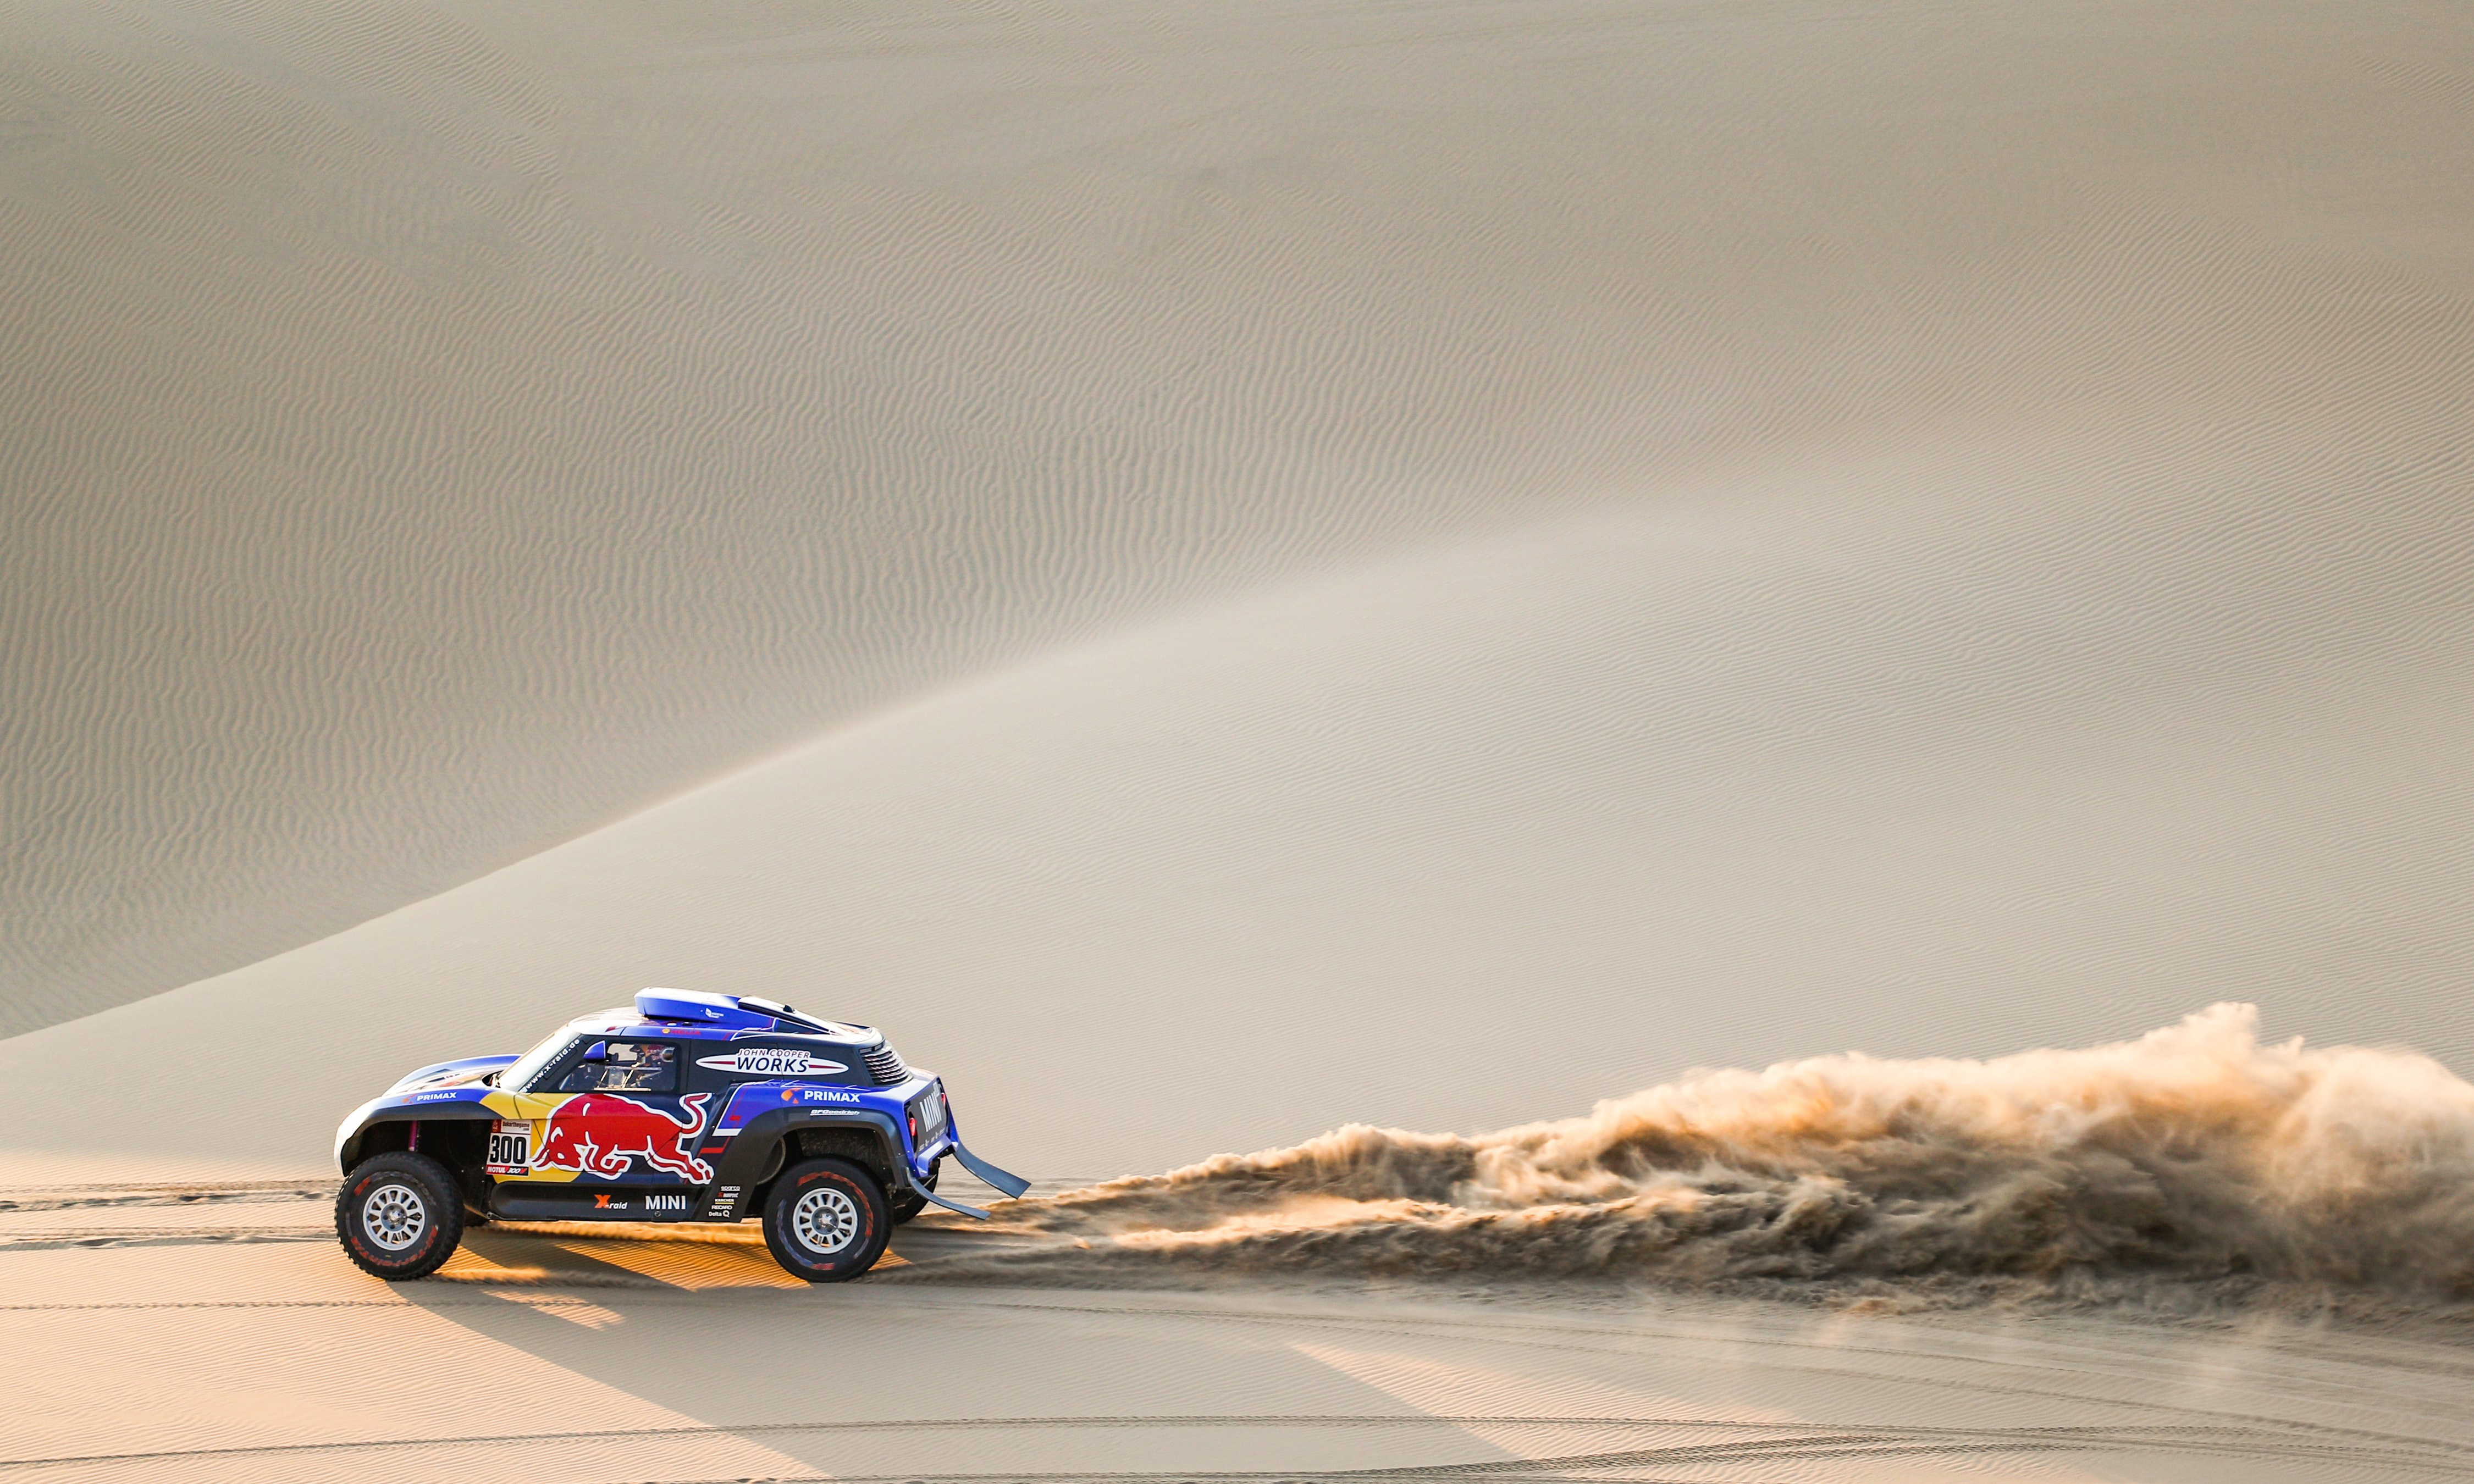 Car Desert Rallying Sand Vehicle 4500x2700